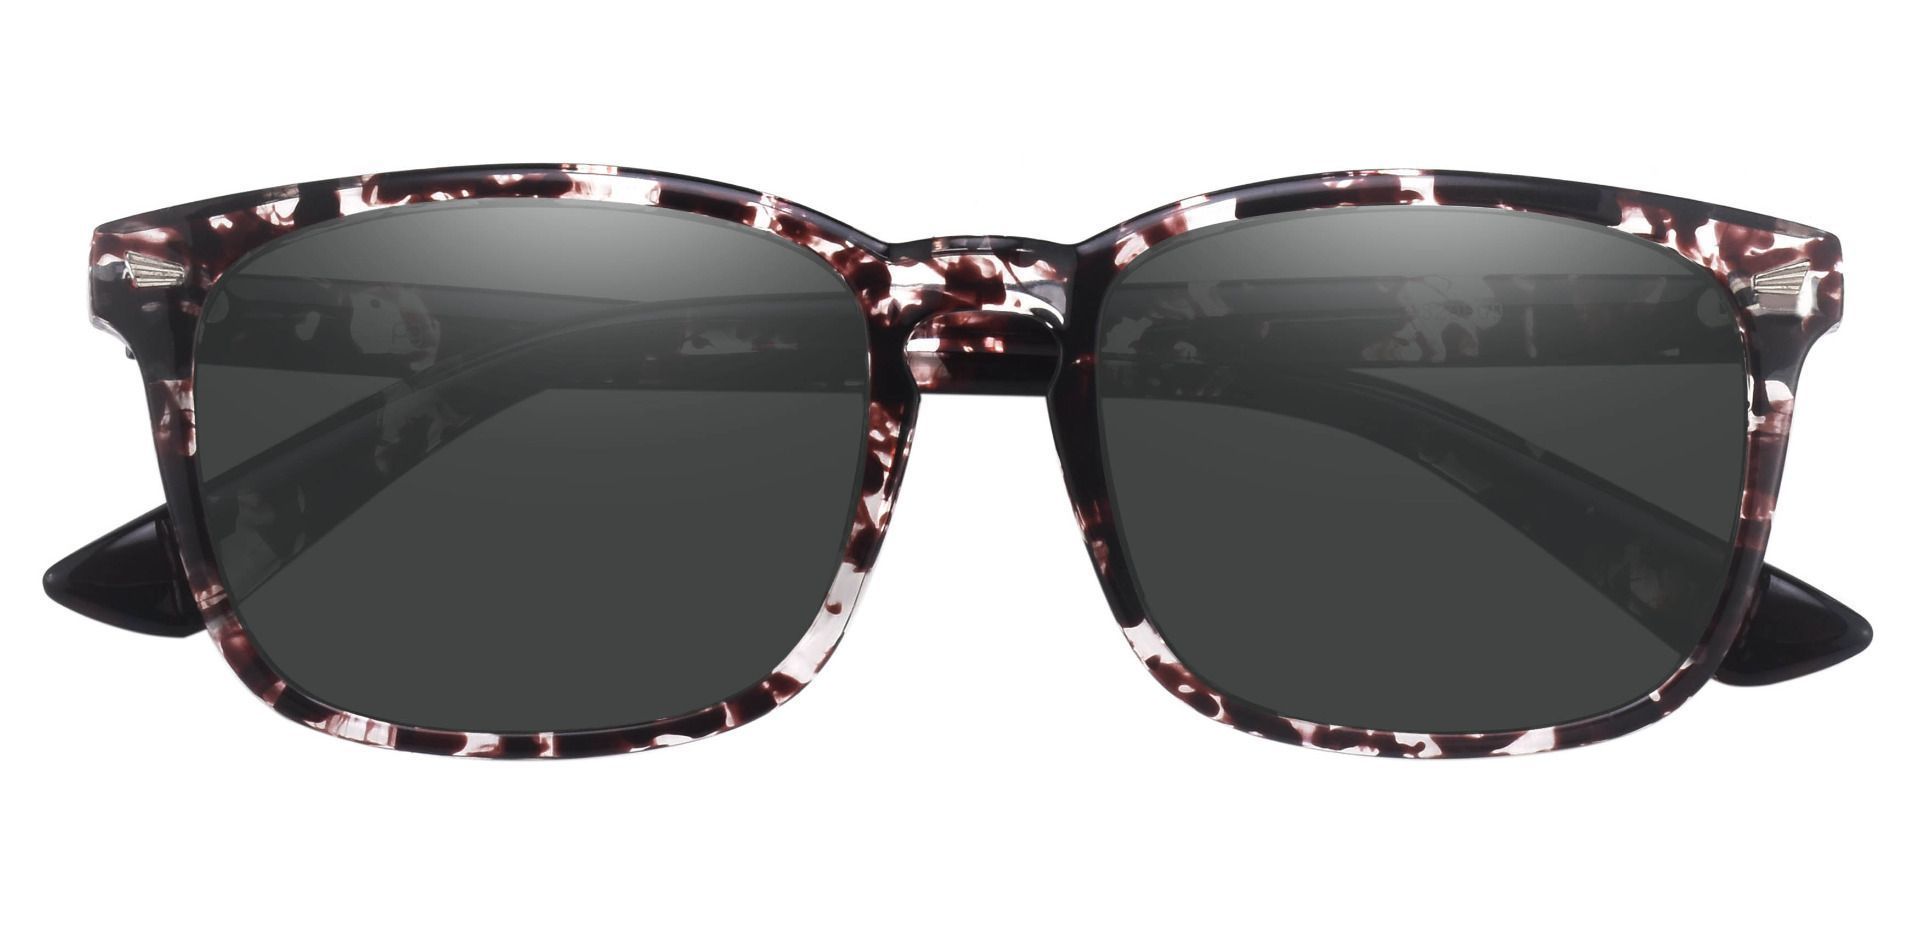 Zen Square Prescription Sunglasses - Black Frame With Gray Lenses | Men ...